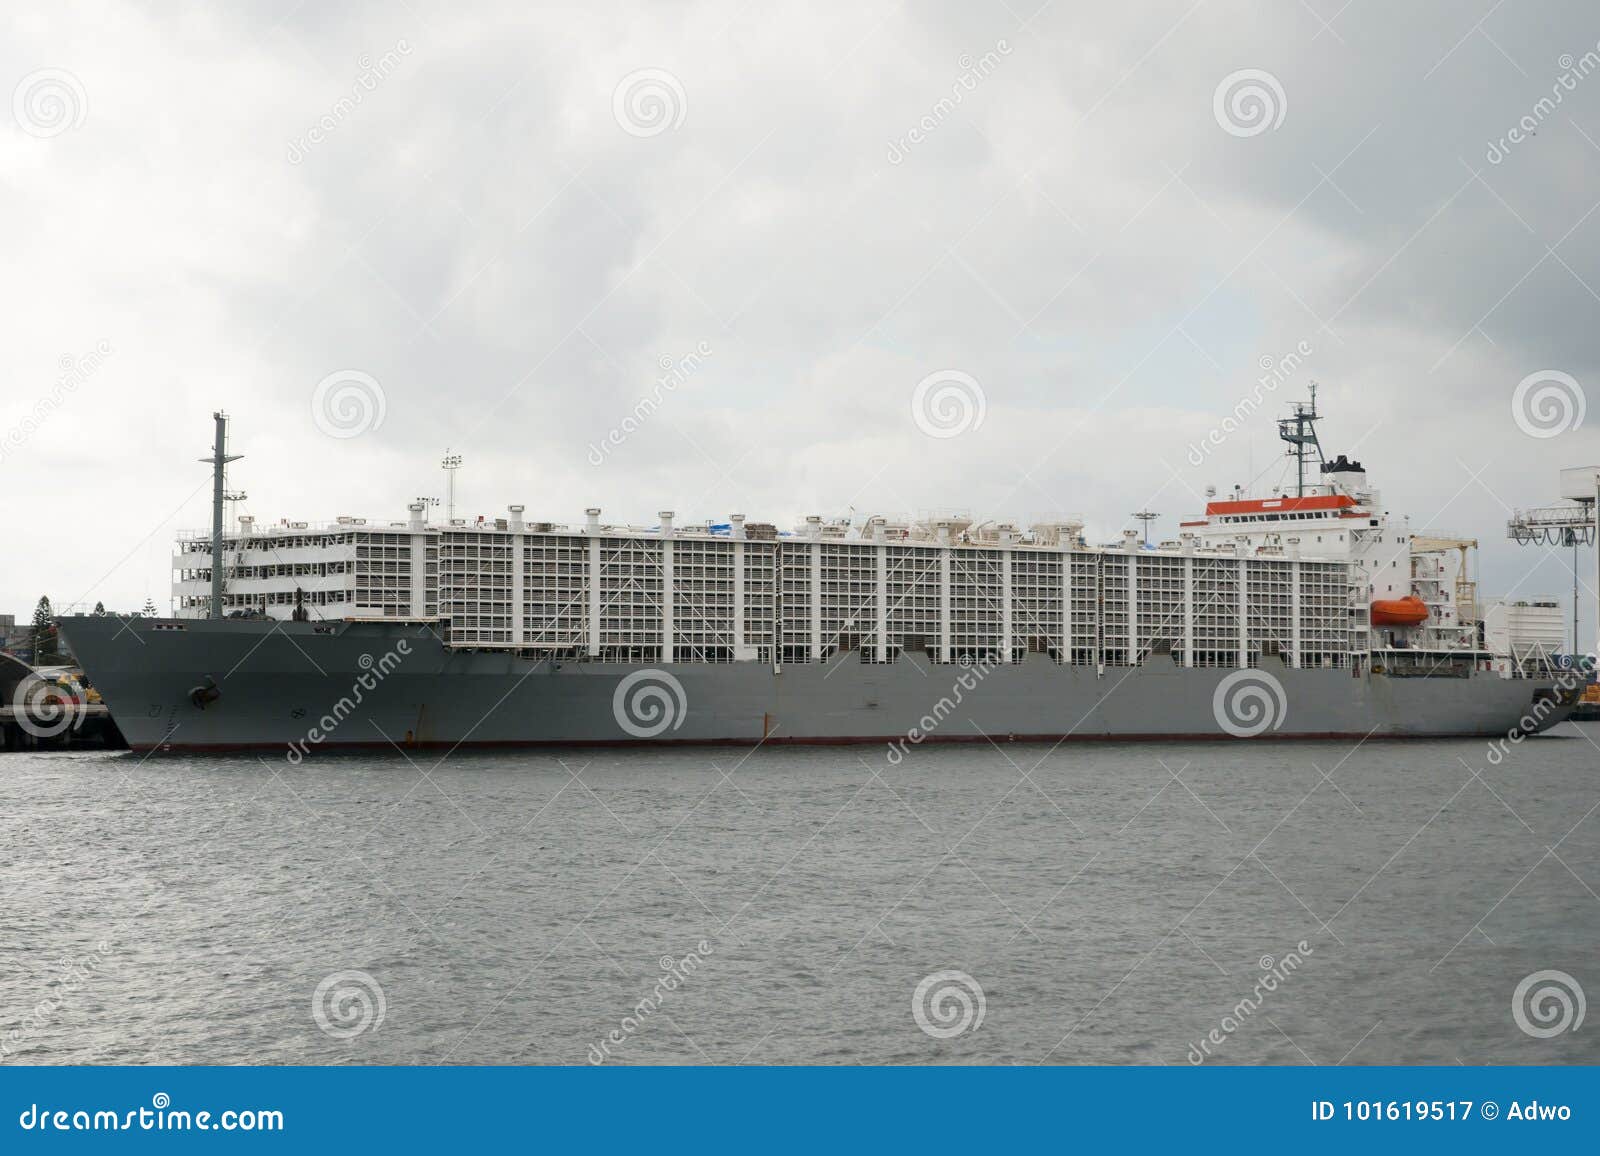 livestock carrier shipping vessel